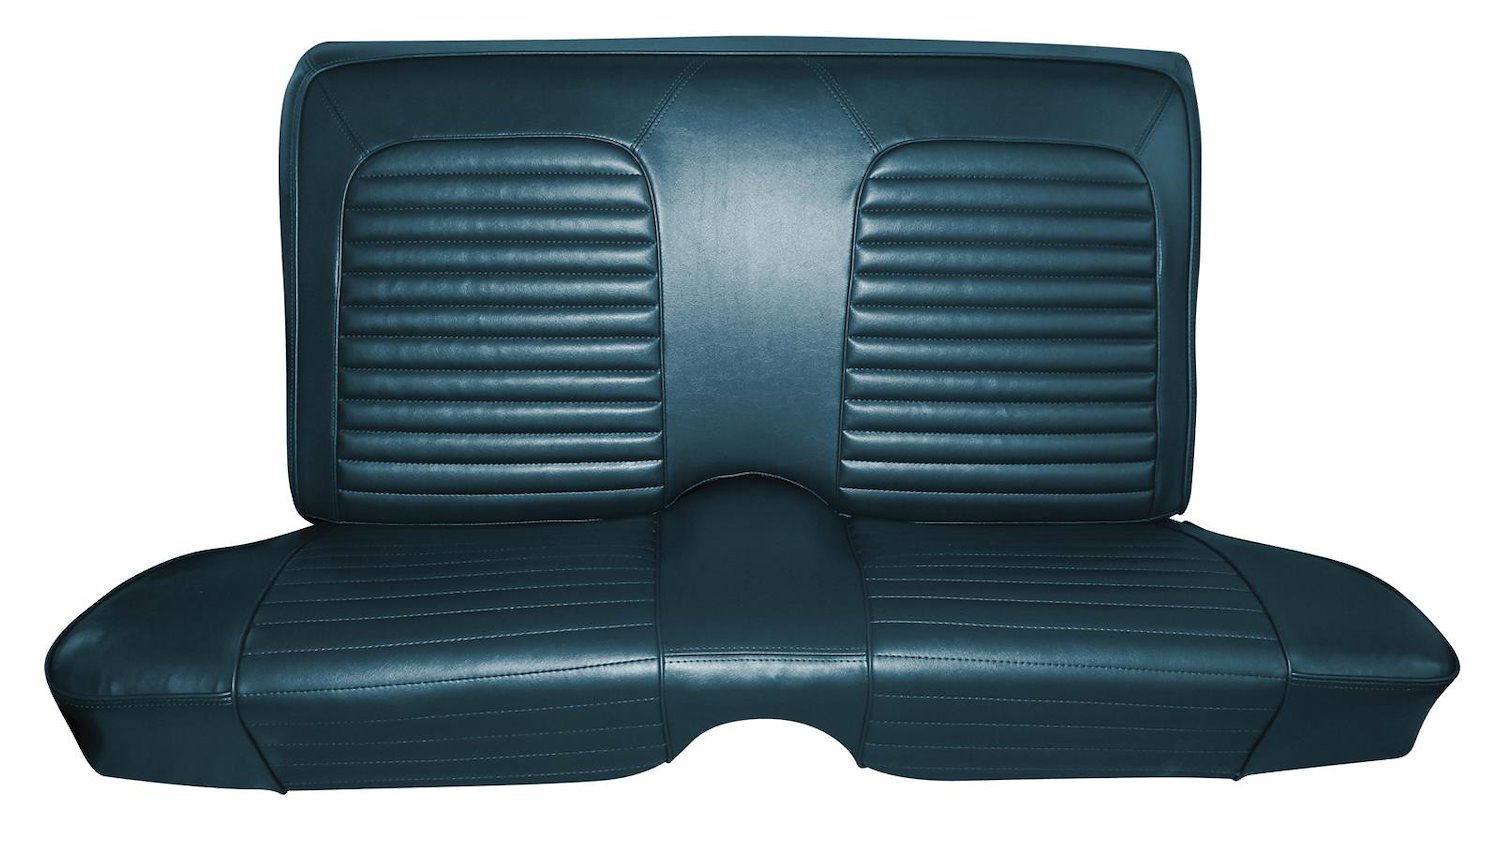 1965 Ford Falcon Futura Station Wagon Interior Two-Tone Rear Bench Seat Upholstery Set